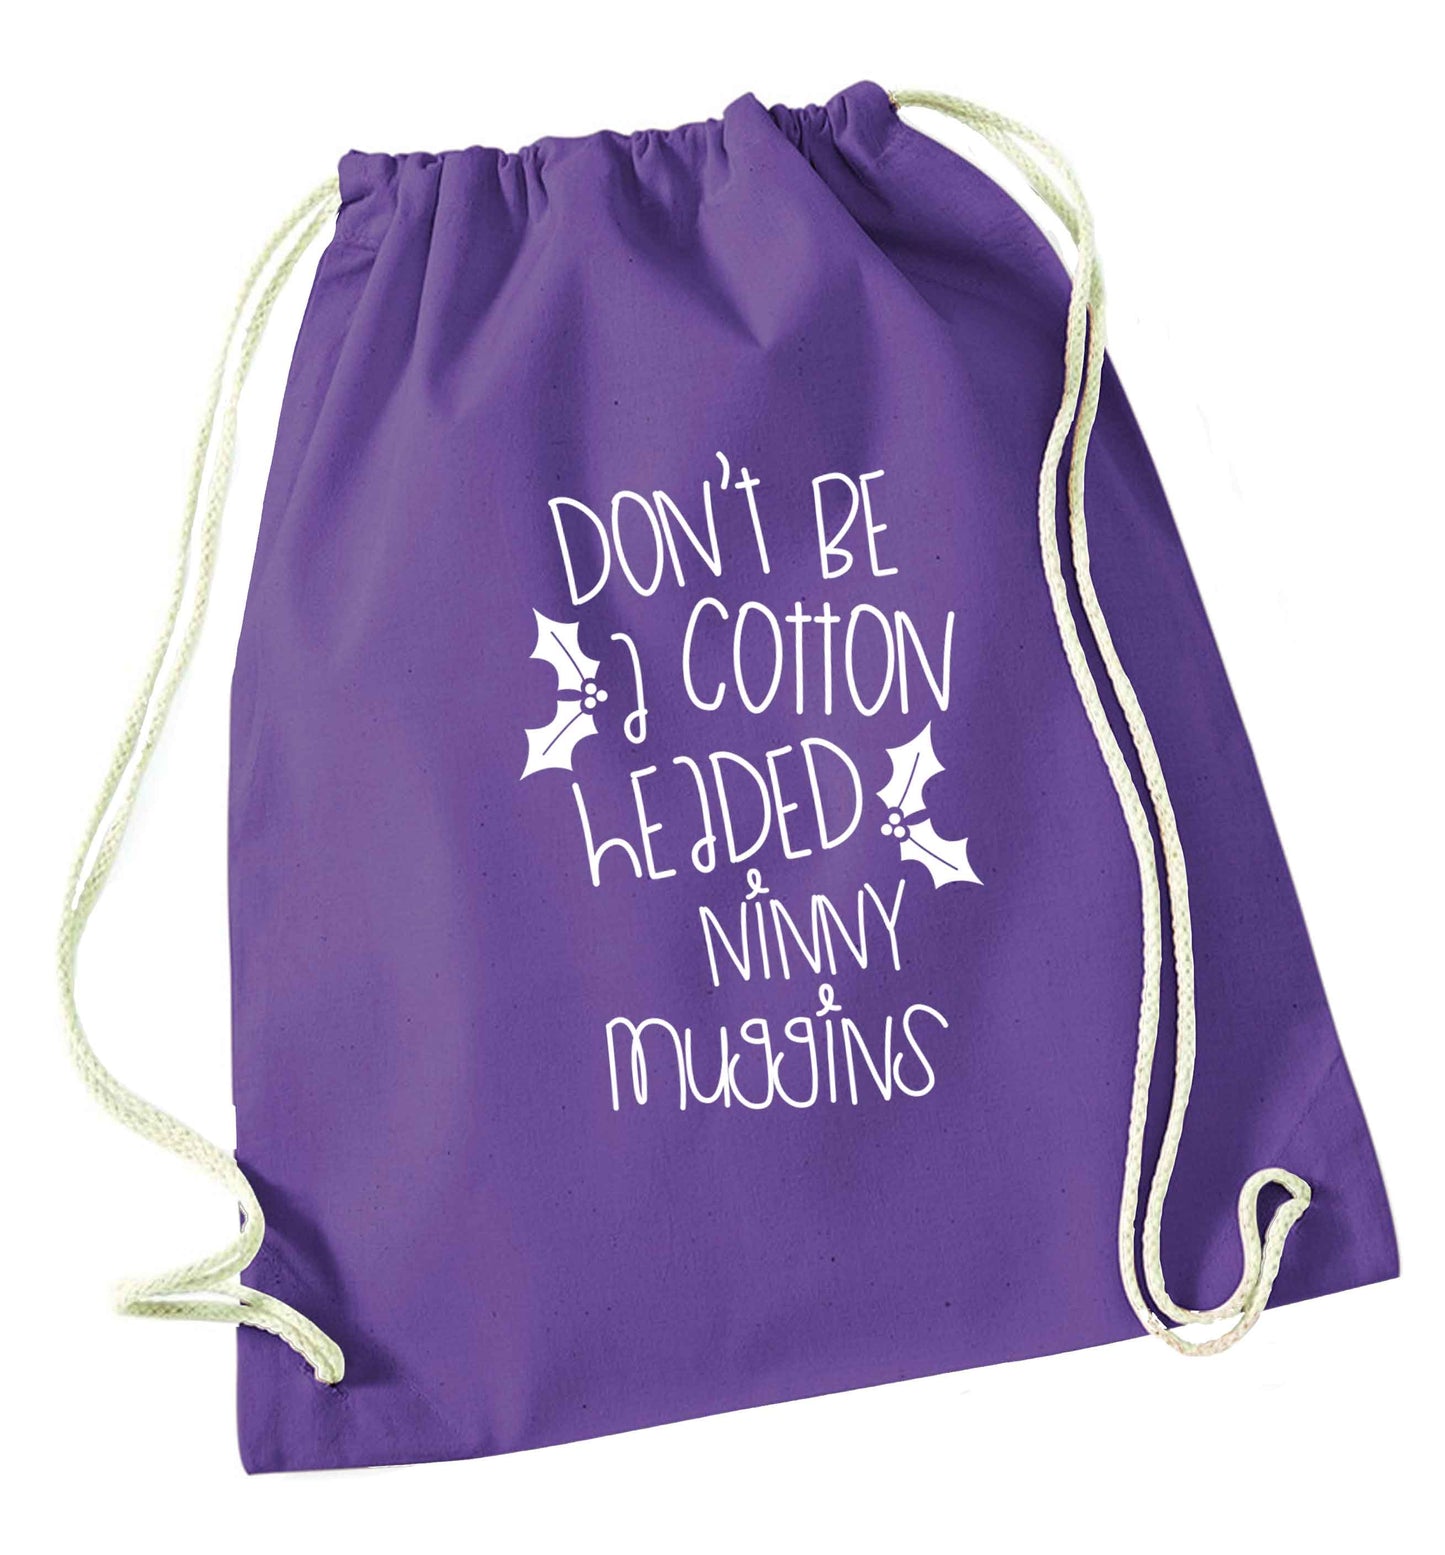 Too Late to be Good purple drawstring bag